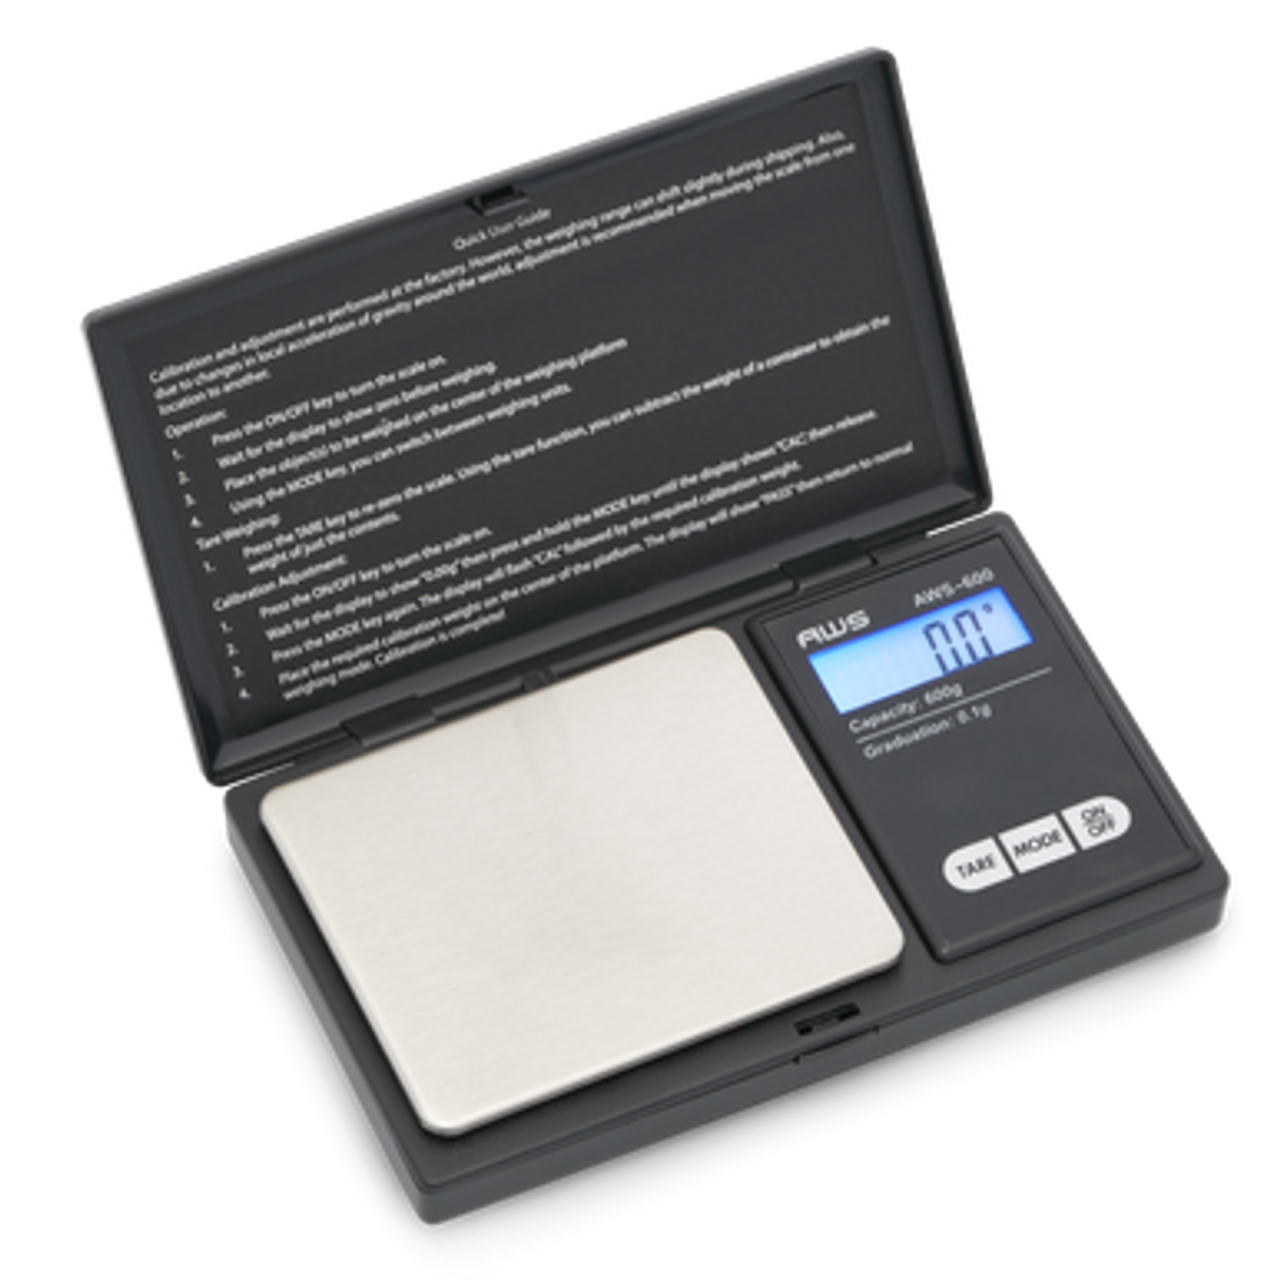 AWS - 600g Digital Pocket Scale - 600g X 0.1g